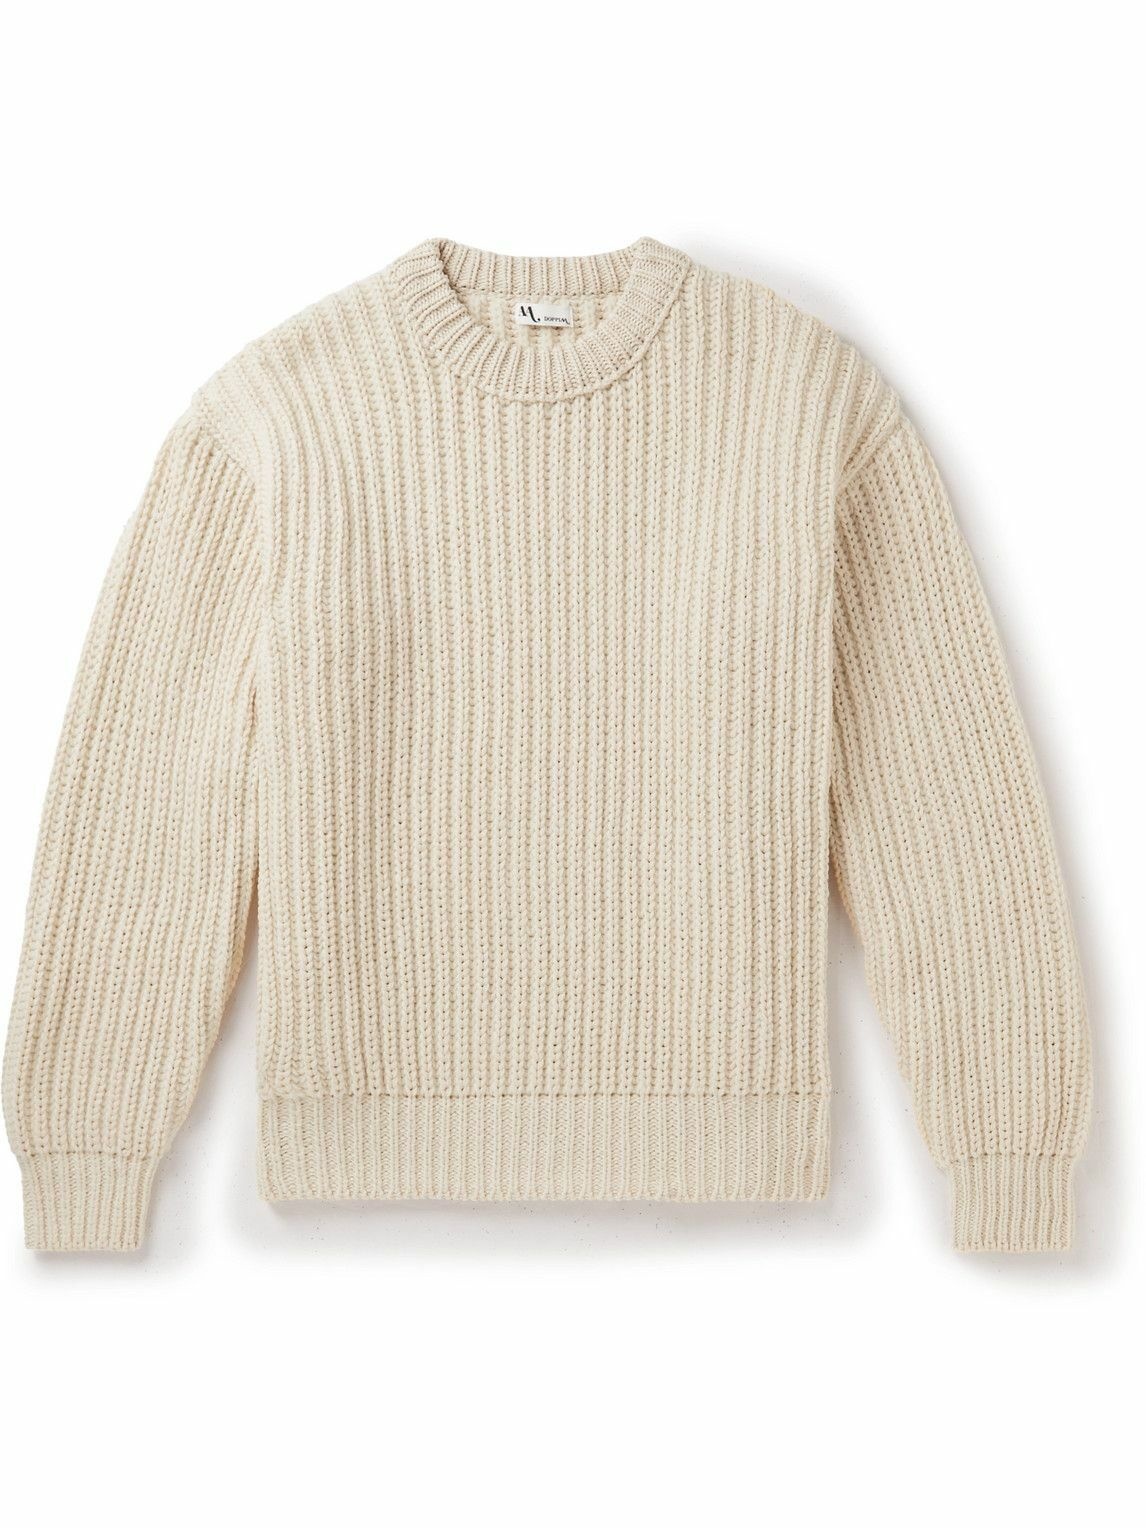 DOPPIAA - Ribbed Wool-Blend Sweater - Neutrals DOPPIAA